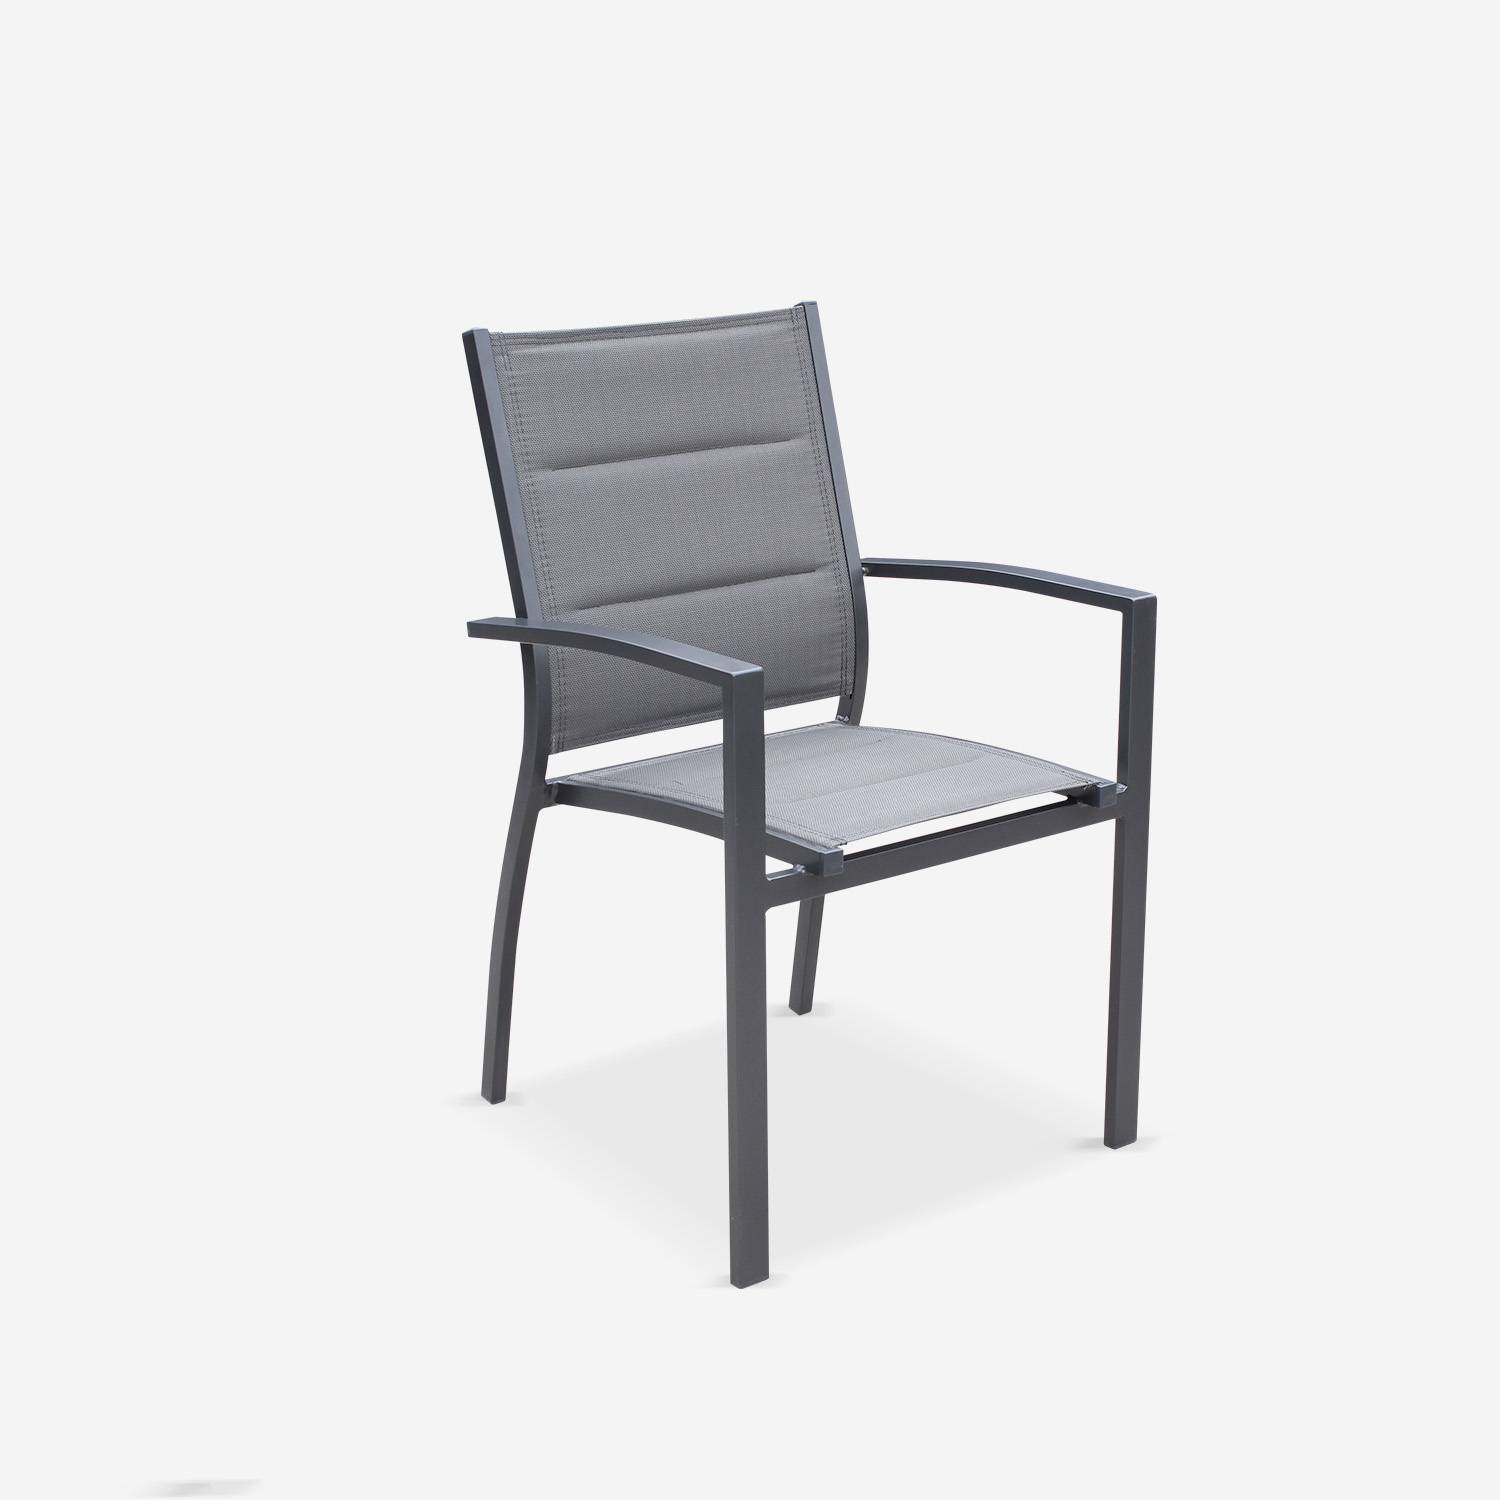 Juego de 2 sillas - Chicago / Odenton / Philadelphia Antracita - aluminio antracita y textileno gris oscuro, apilables Photo2